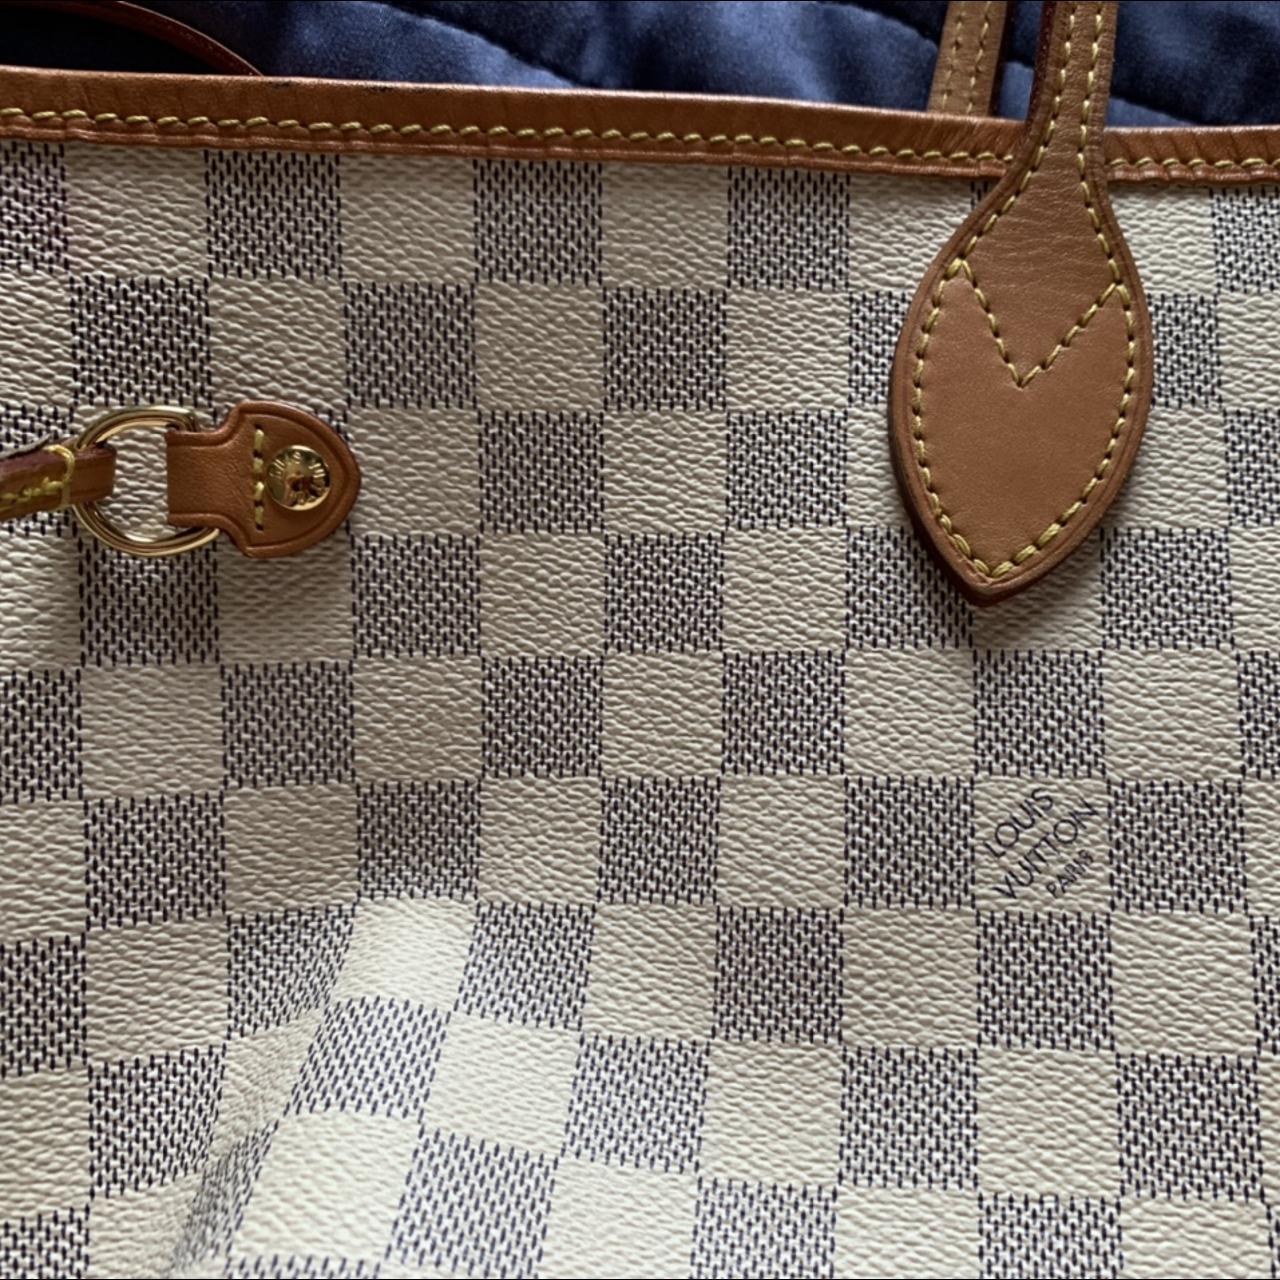 Louis Vuitton Checkered Handbag - 15 For Sale on 1stDibs